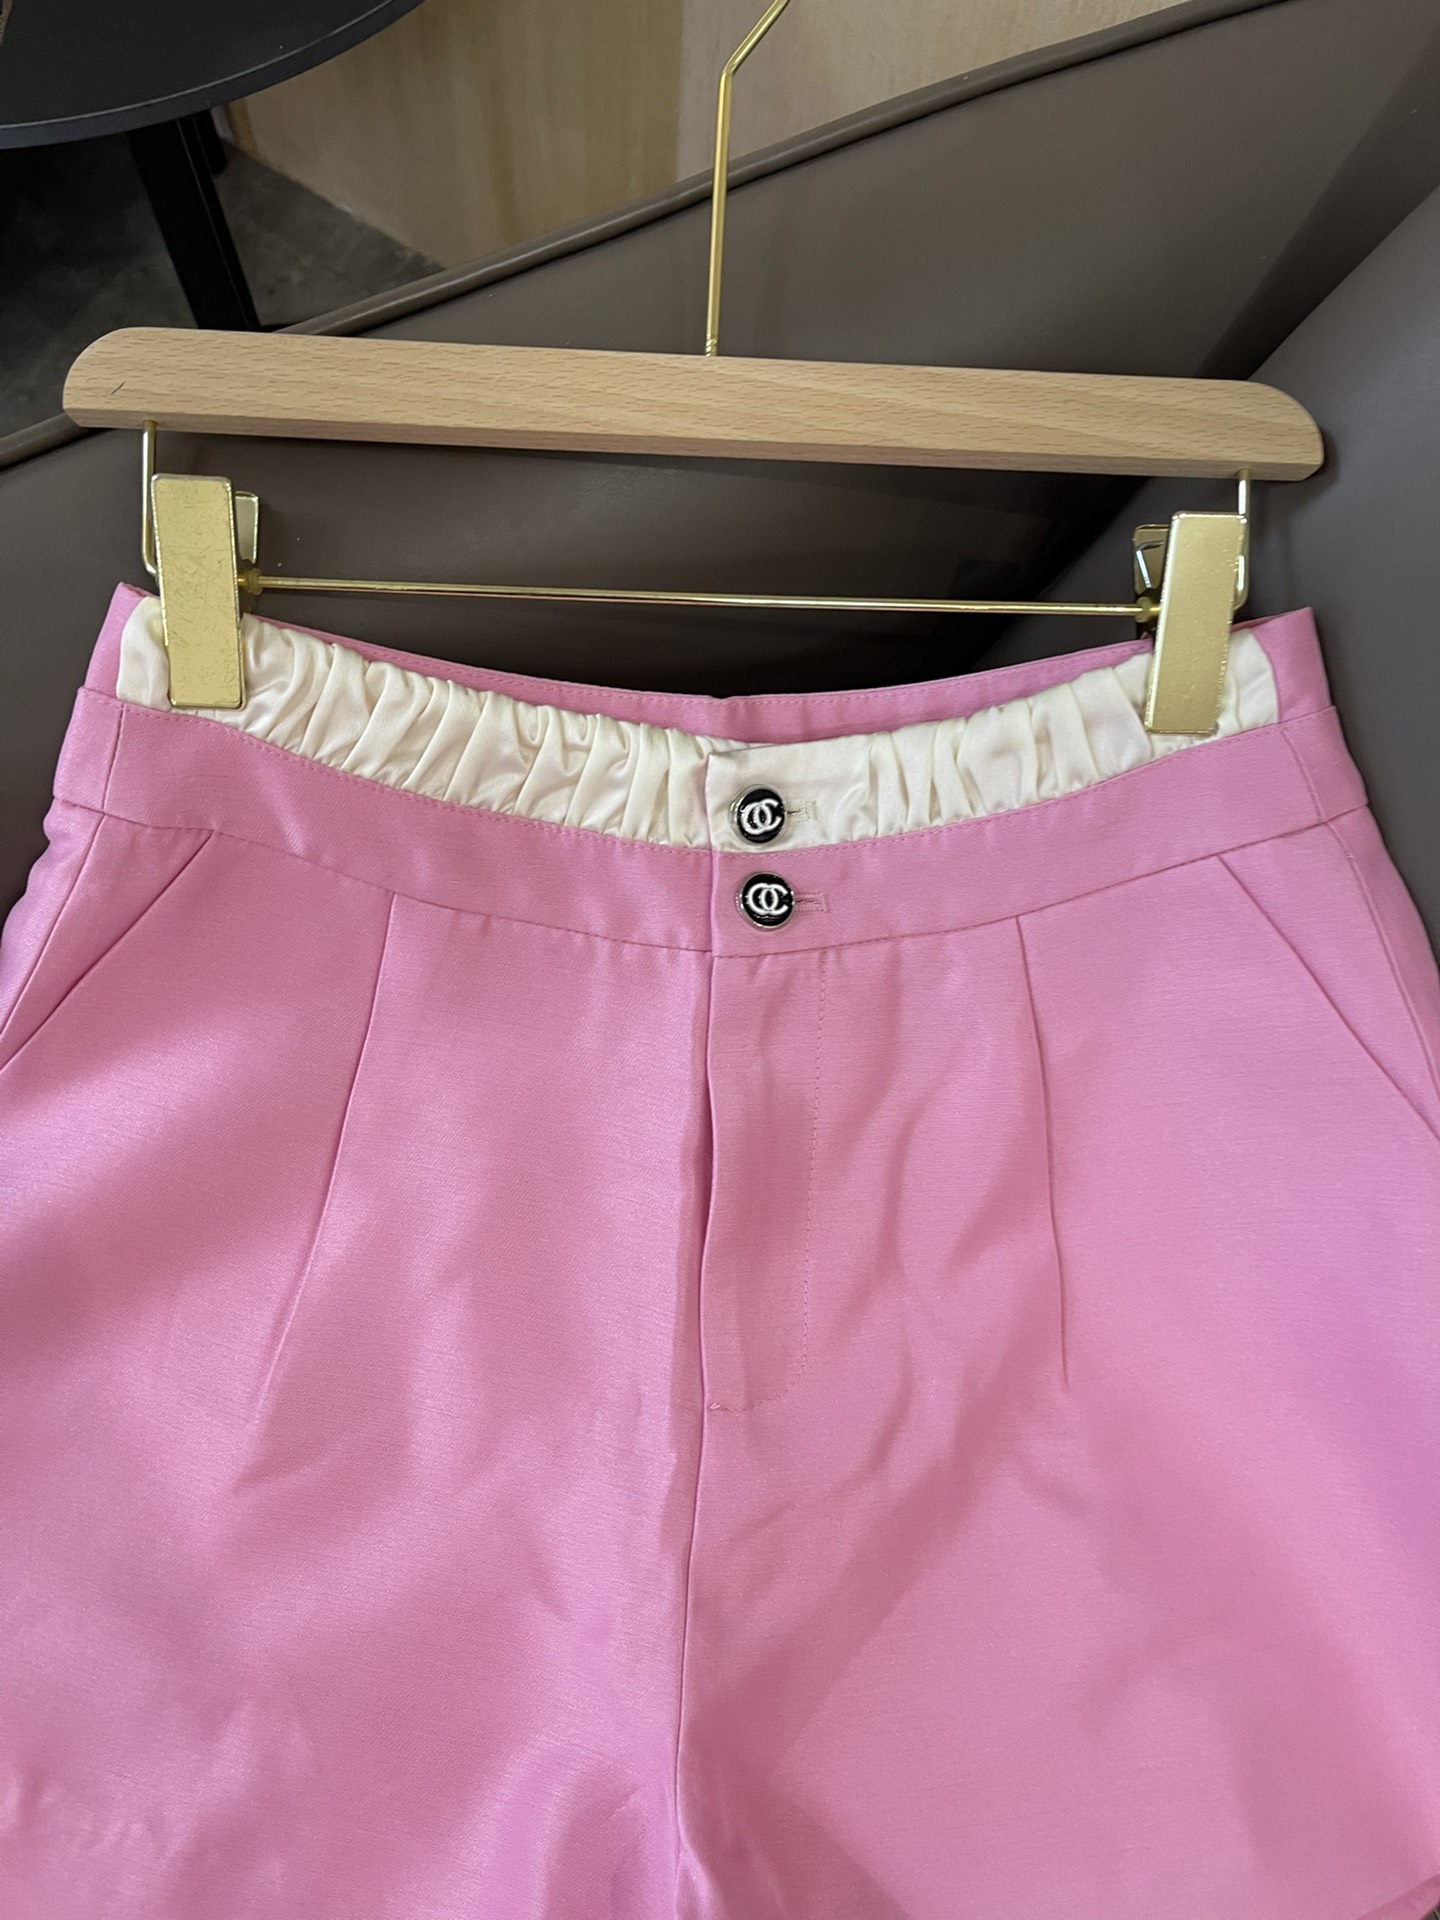 QY001#新款短裤chanel双扣撞色设计腰百搭短裤白色黑色粉色SMLXL